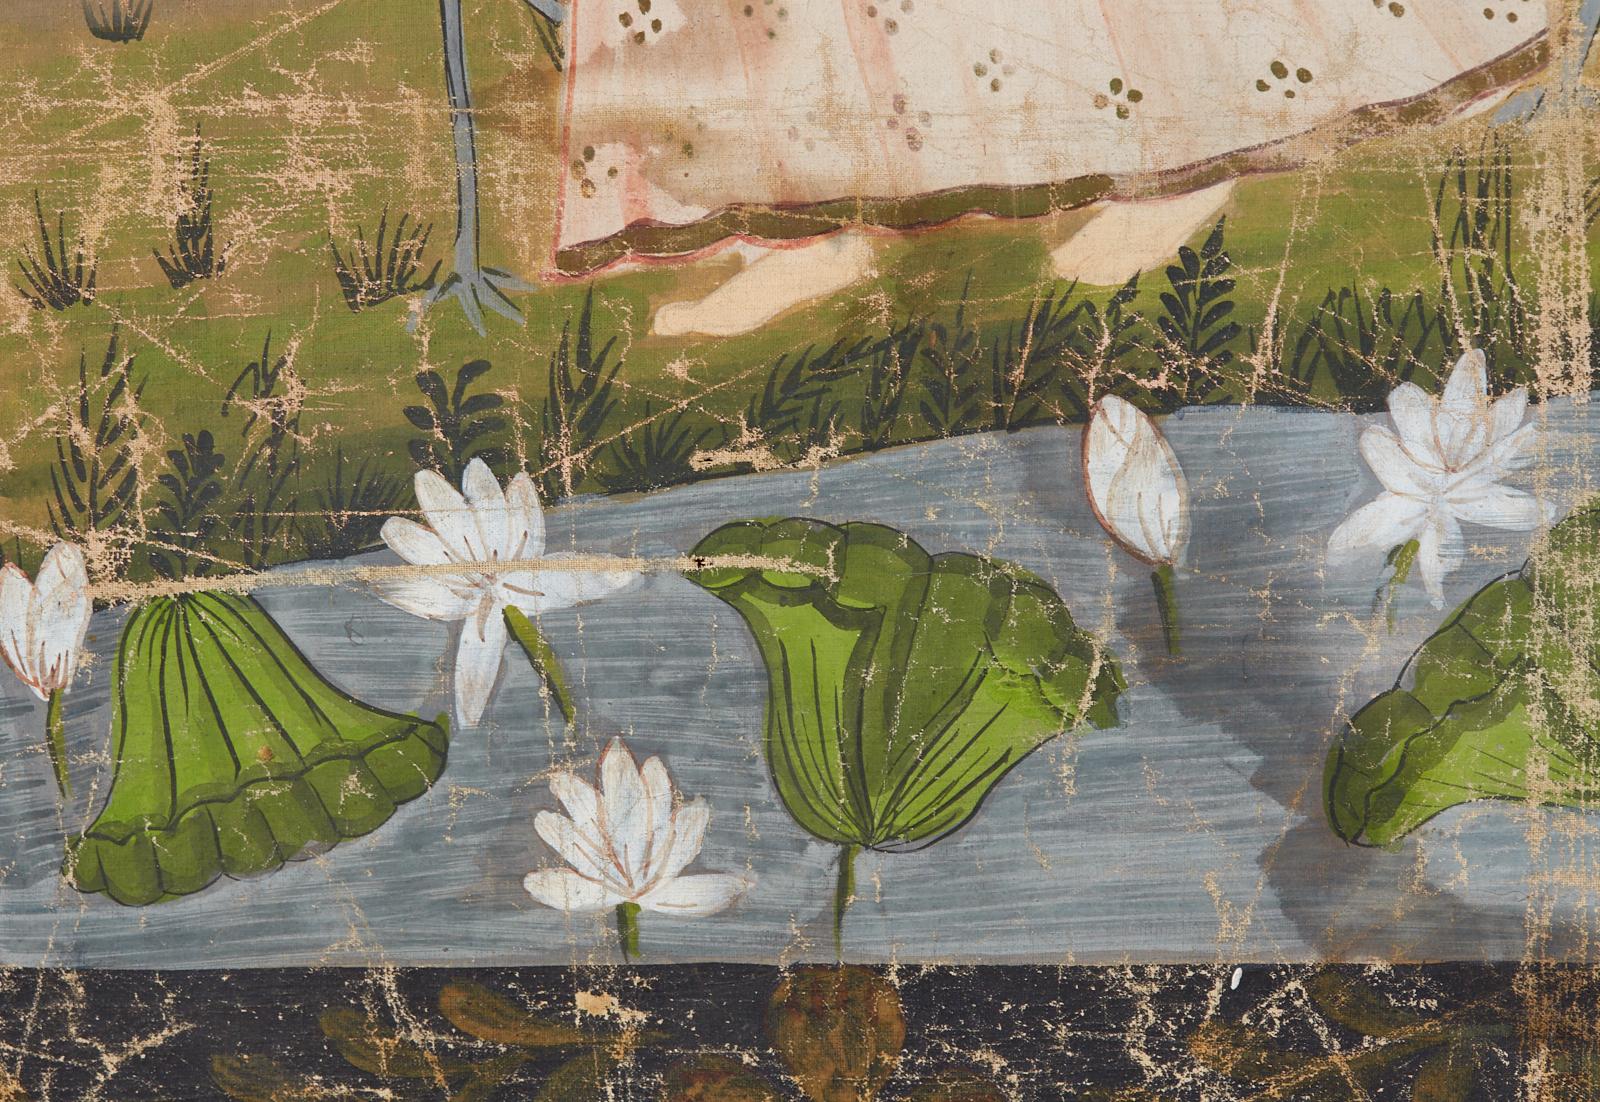 Pichhwai Hindu Painting Figure with Cranes Near Pond 3